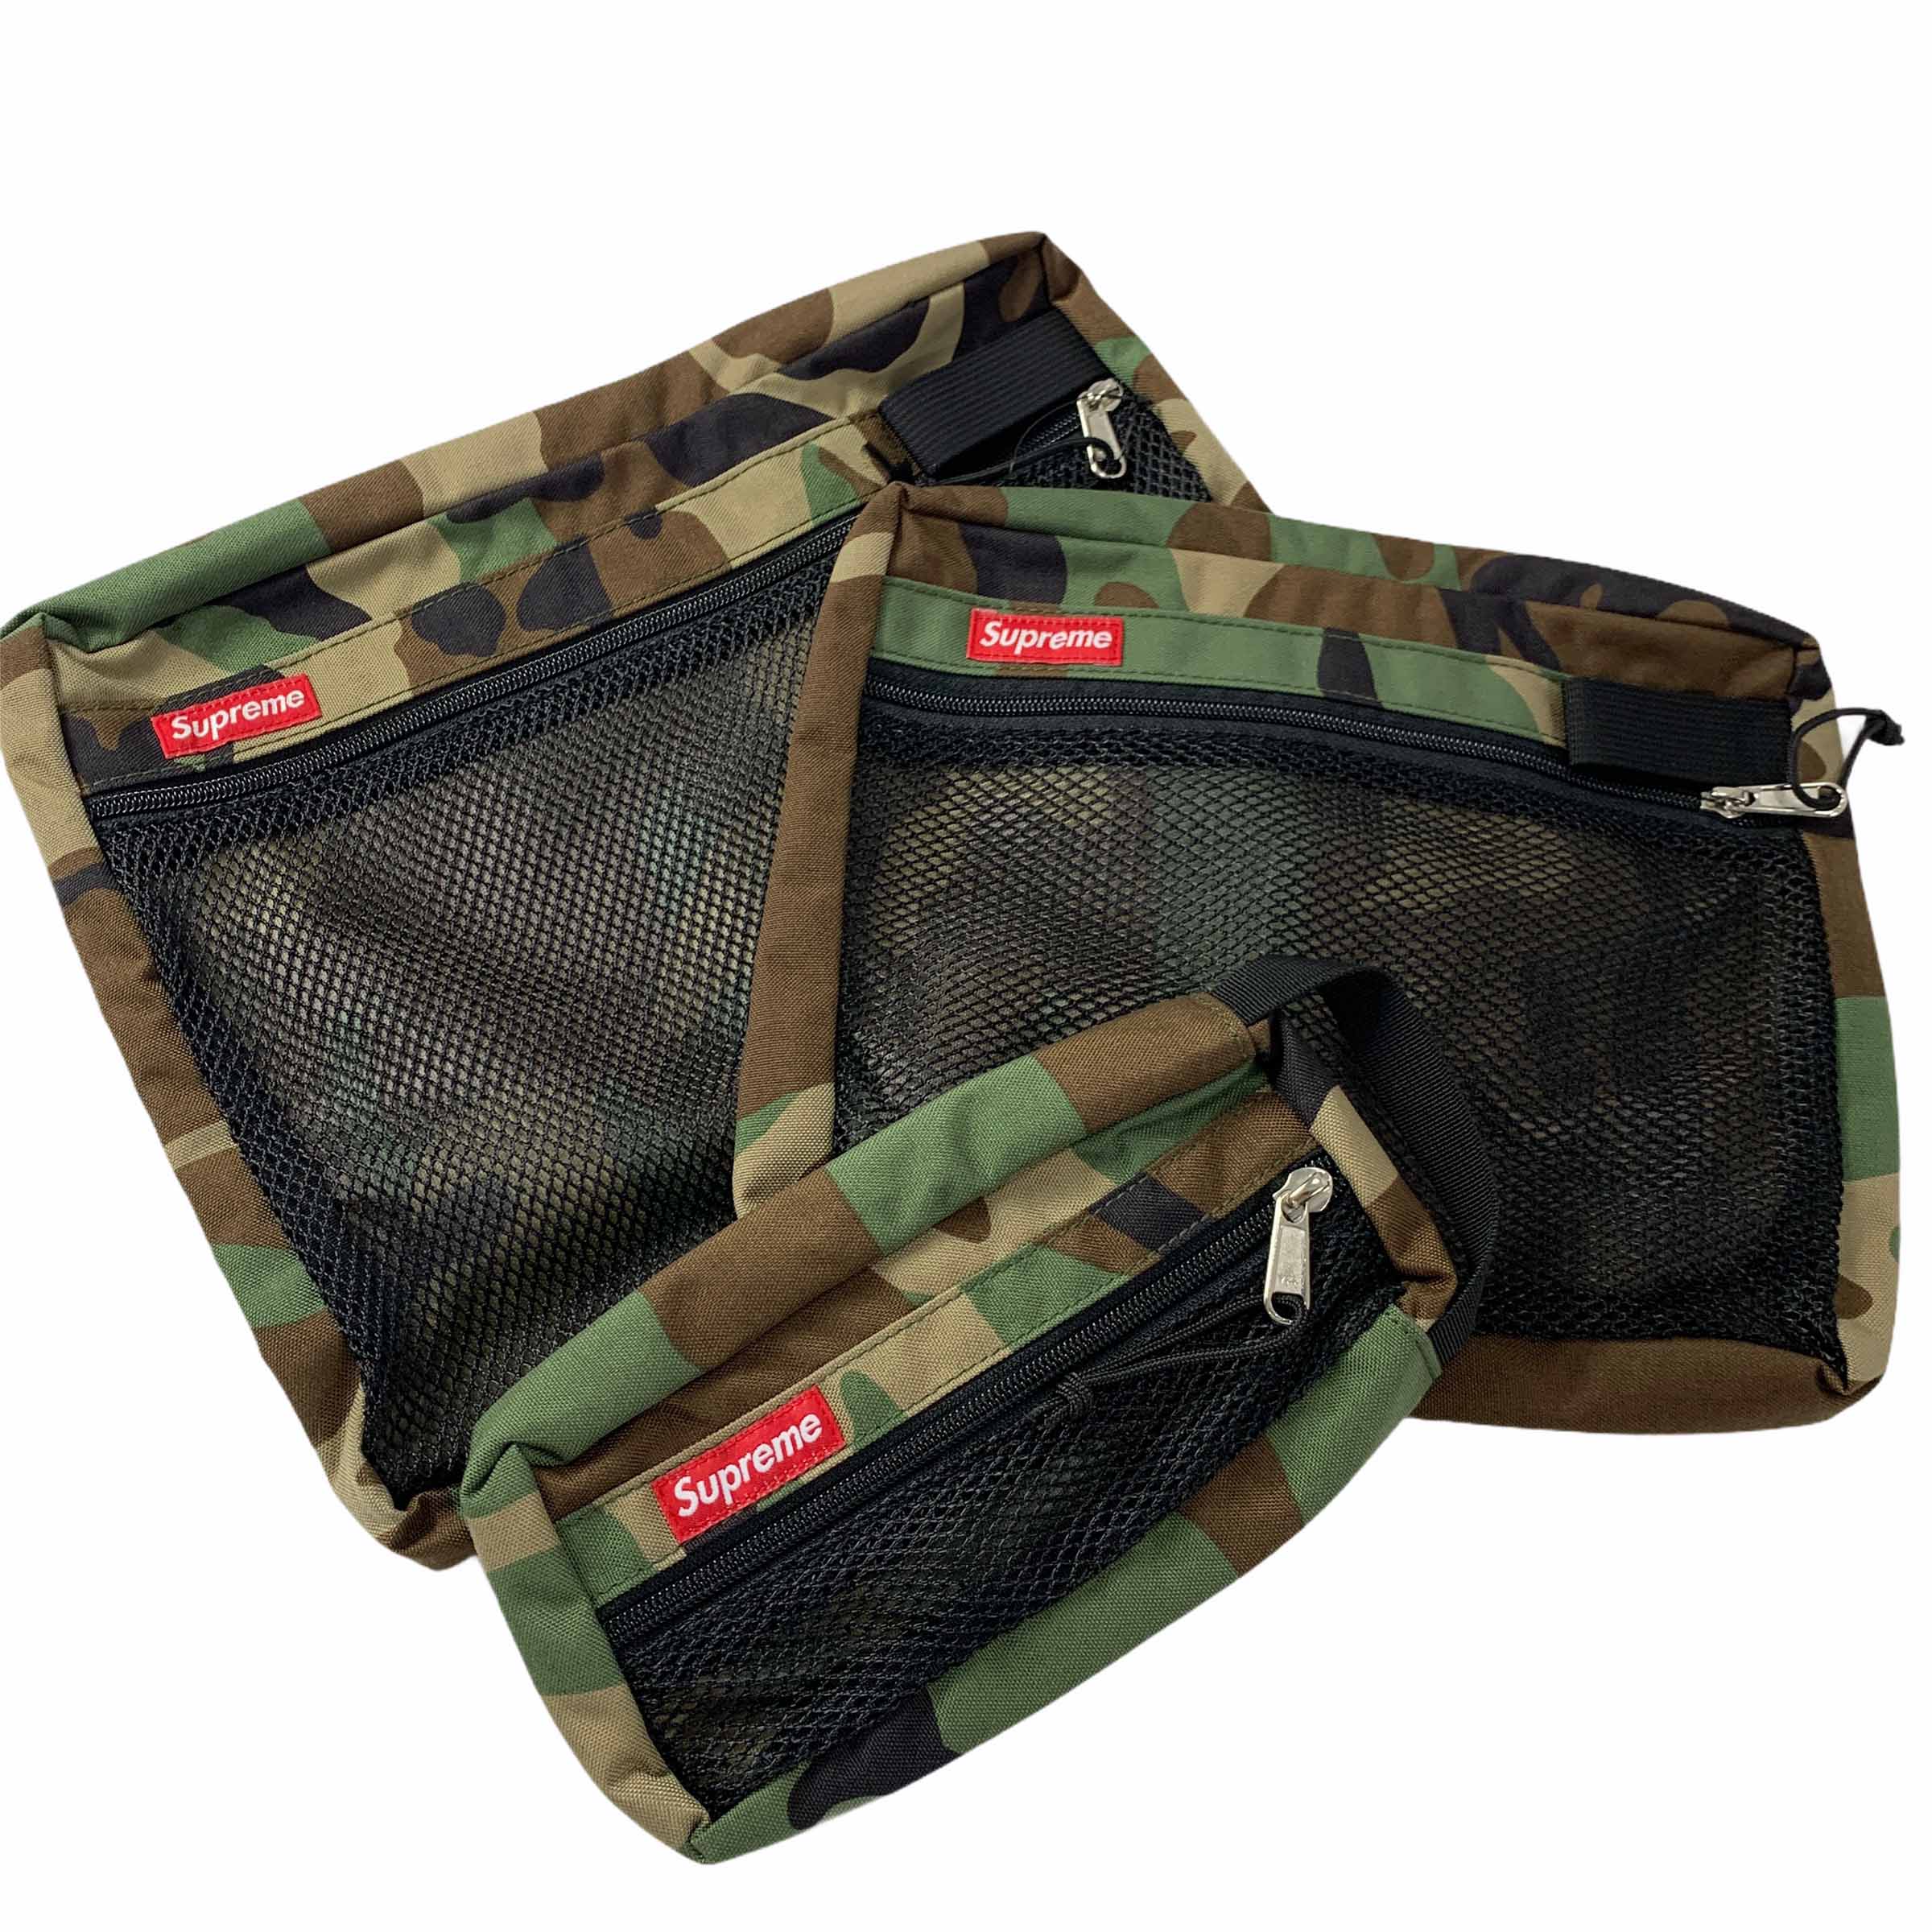 [Supreme] Cordura Camoflage Bag - Size Free